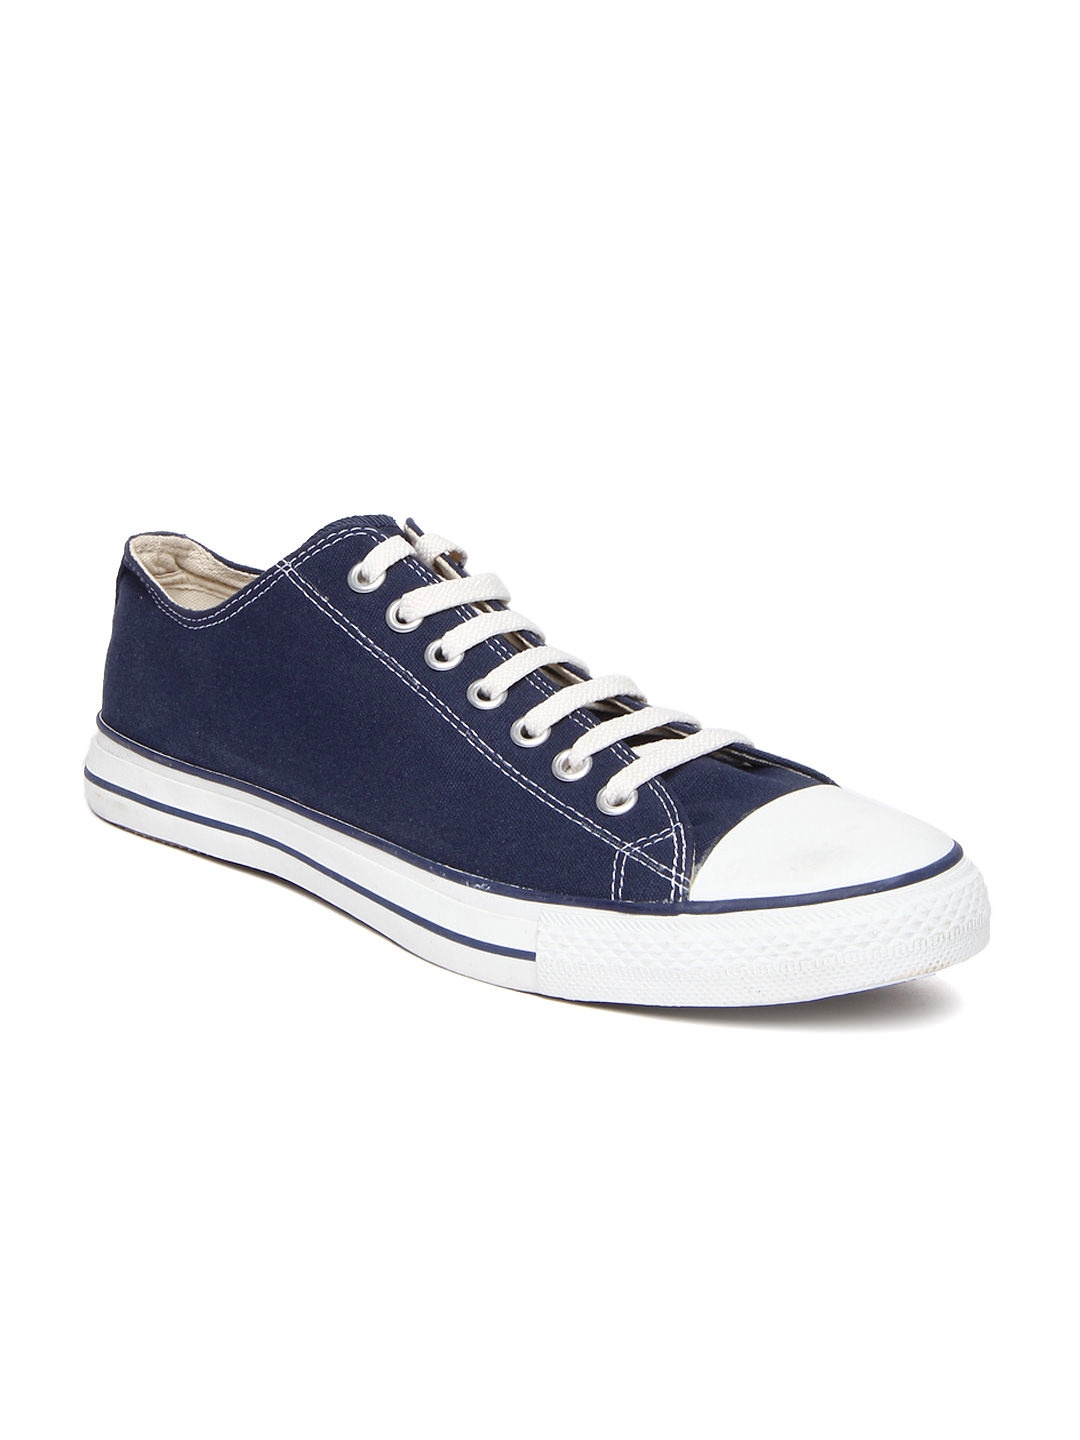 Buy Converse Men Navy Canvas Shoes - Casual Shoes for Men 80346 | Myntra